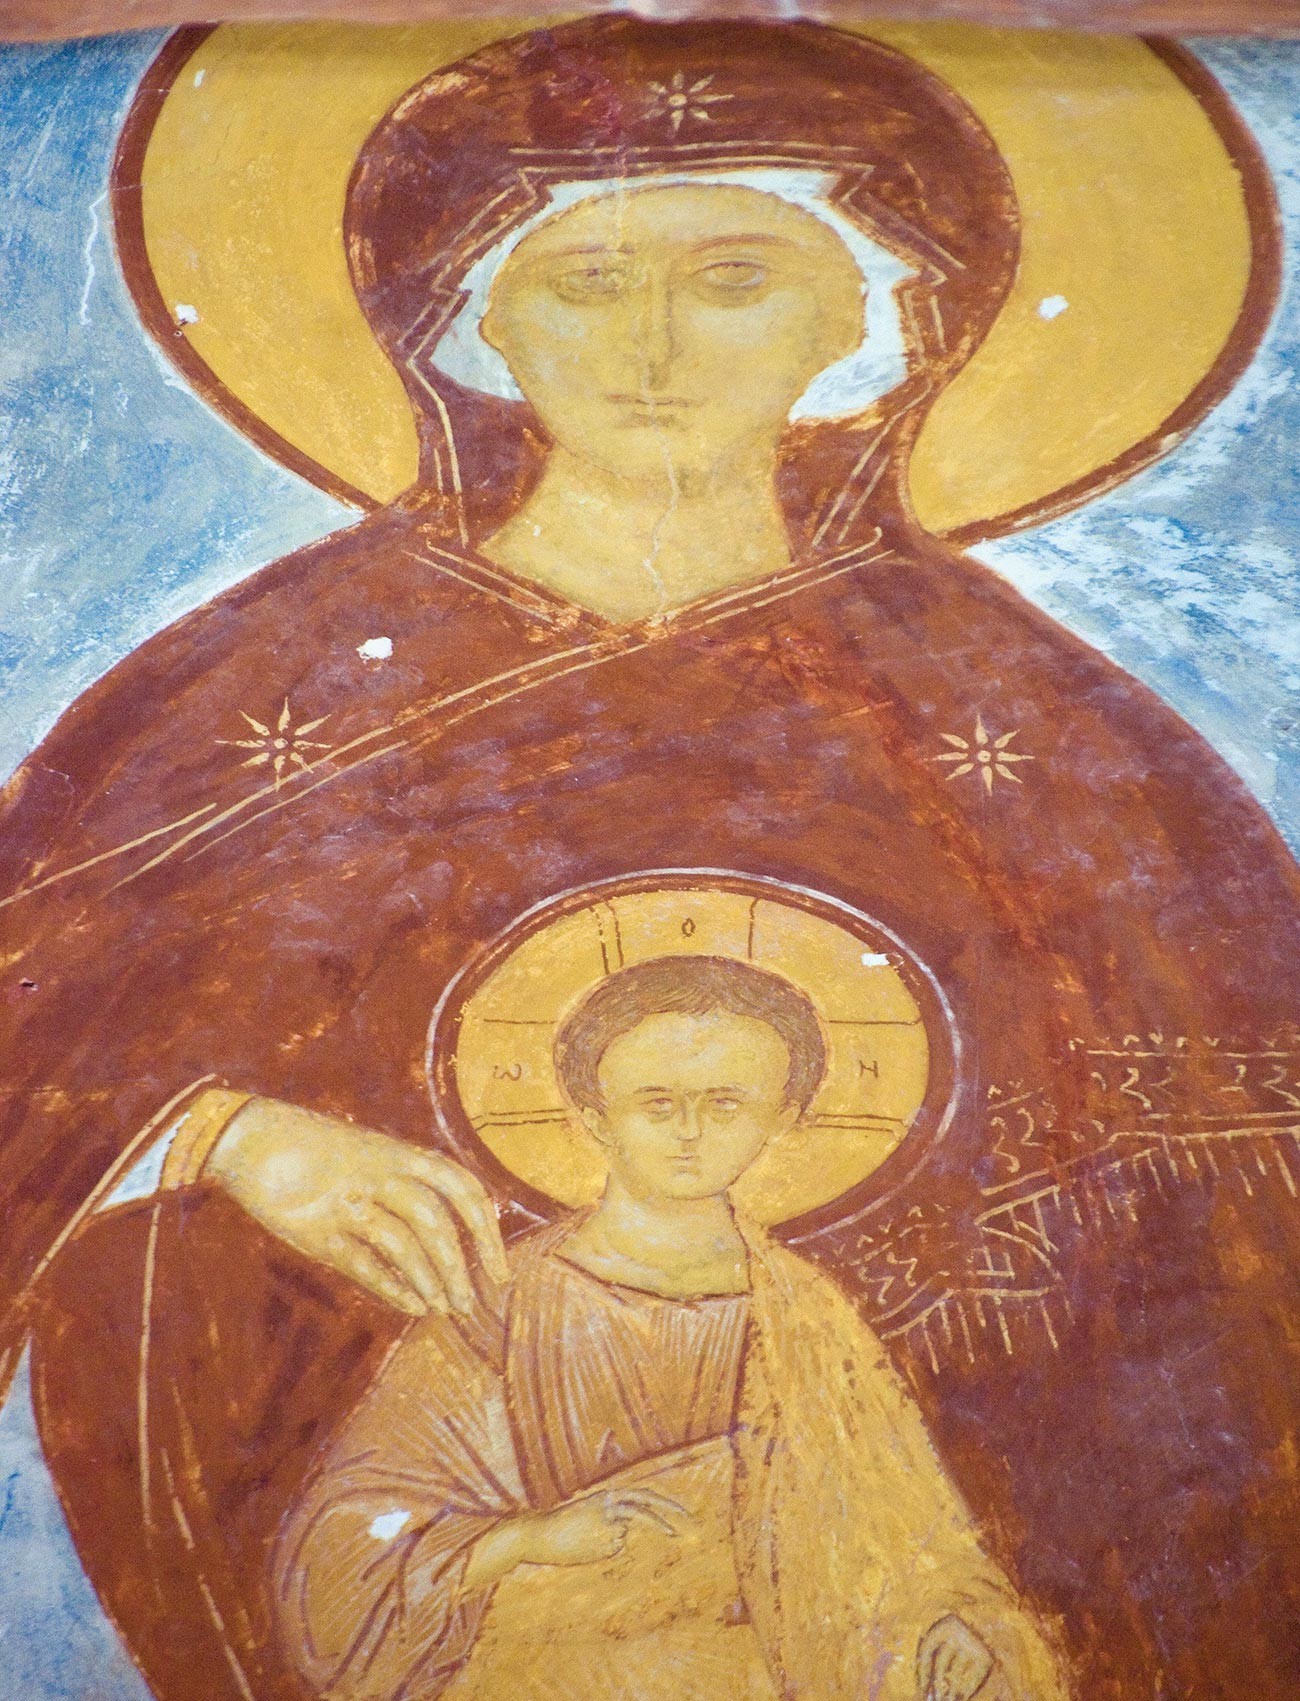 Katedrala rojstva Device Marije. Osrednja apsida. Freska Marije s Kristusom otrokom. 1. junij 2014
